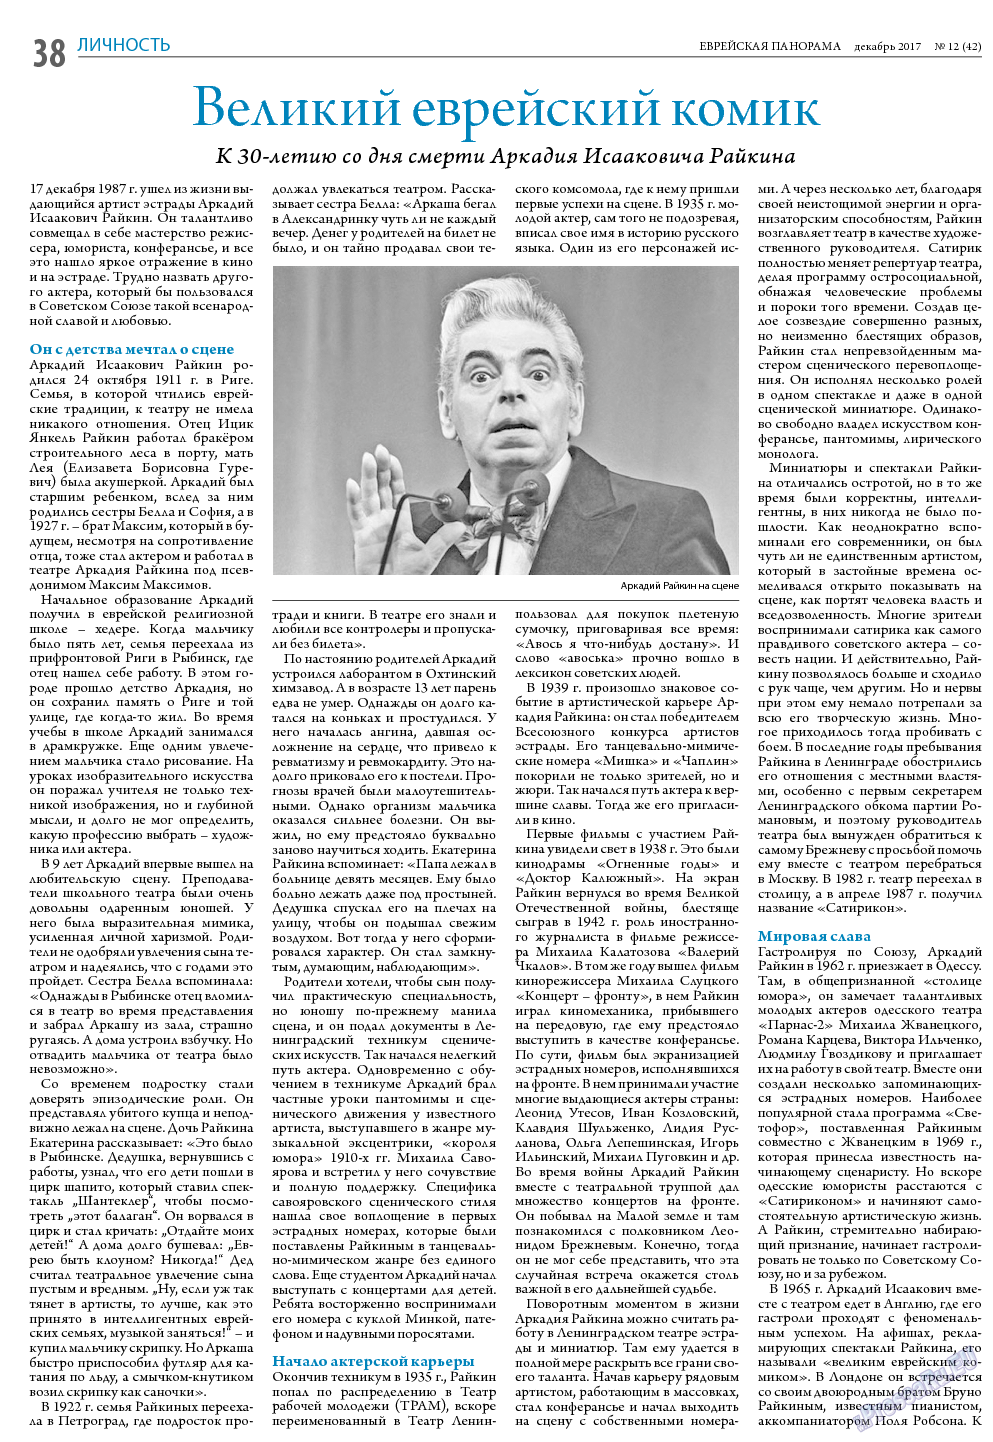 Еврейская панорама, газета. 2017 №12 стр.38